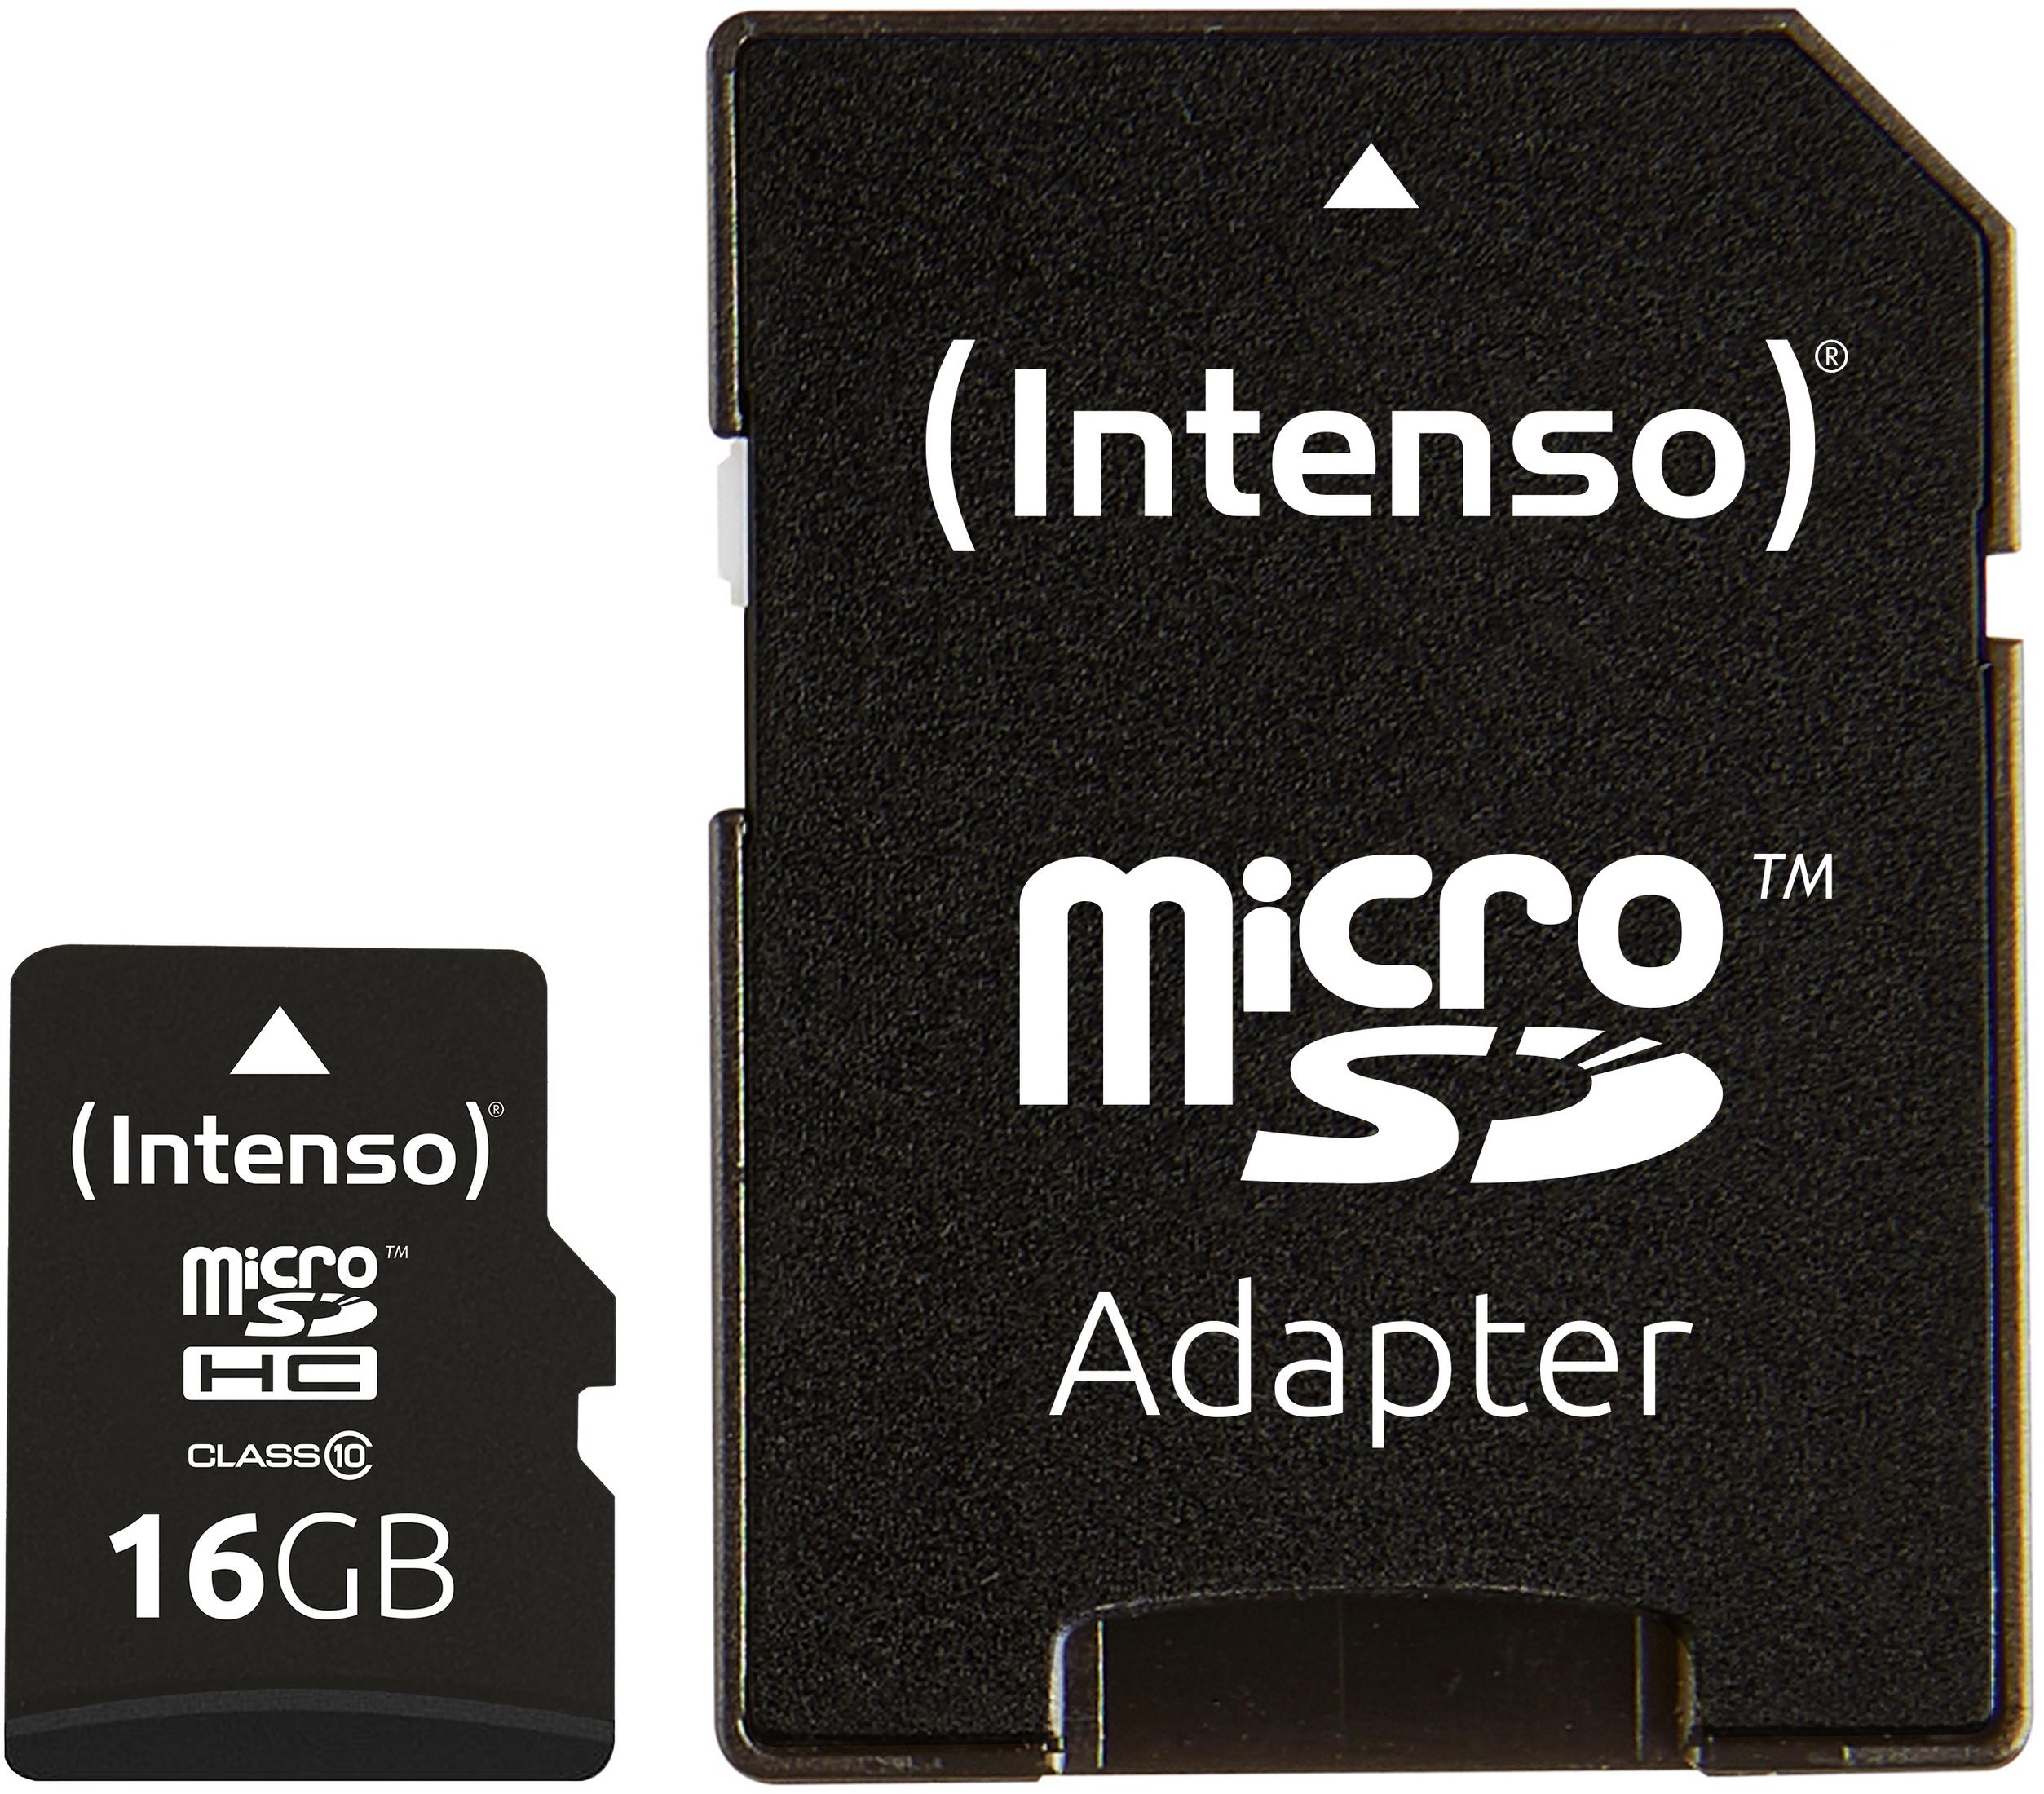 16 GB, 10 MB/s Micro-SDHC 16GB Card microSD 20 Class INTENSO Intenso SDHC, Speicherkarte,